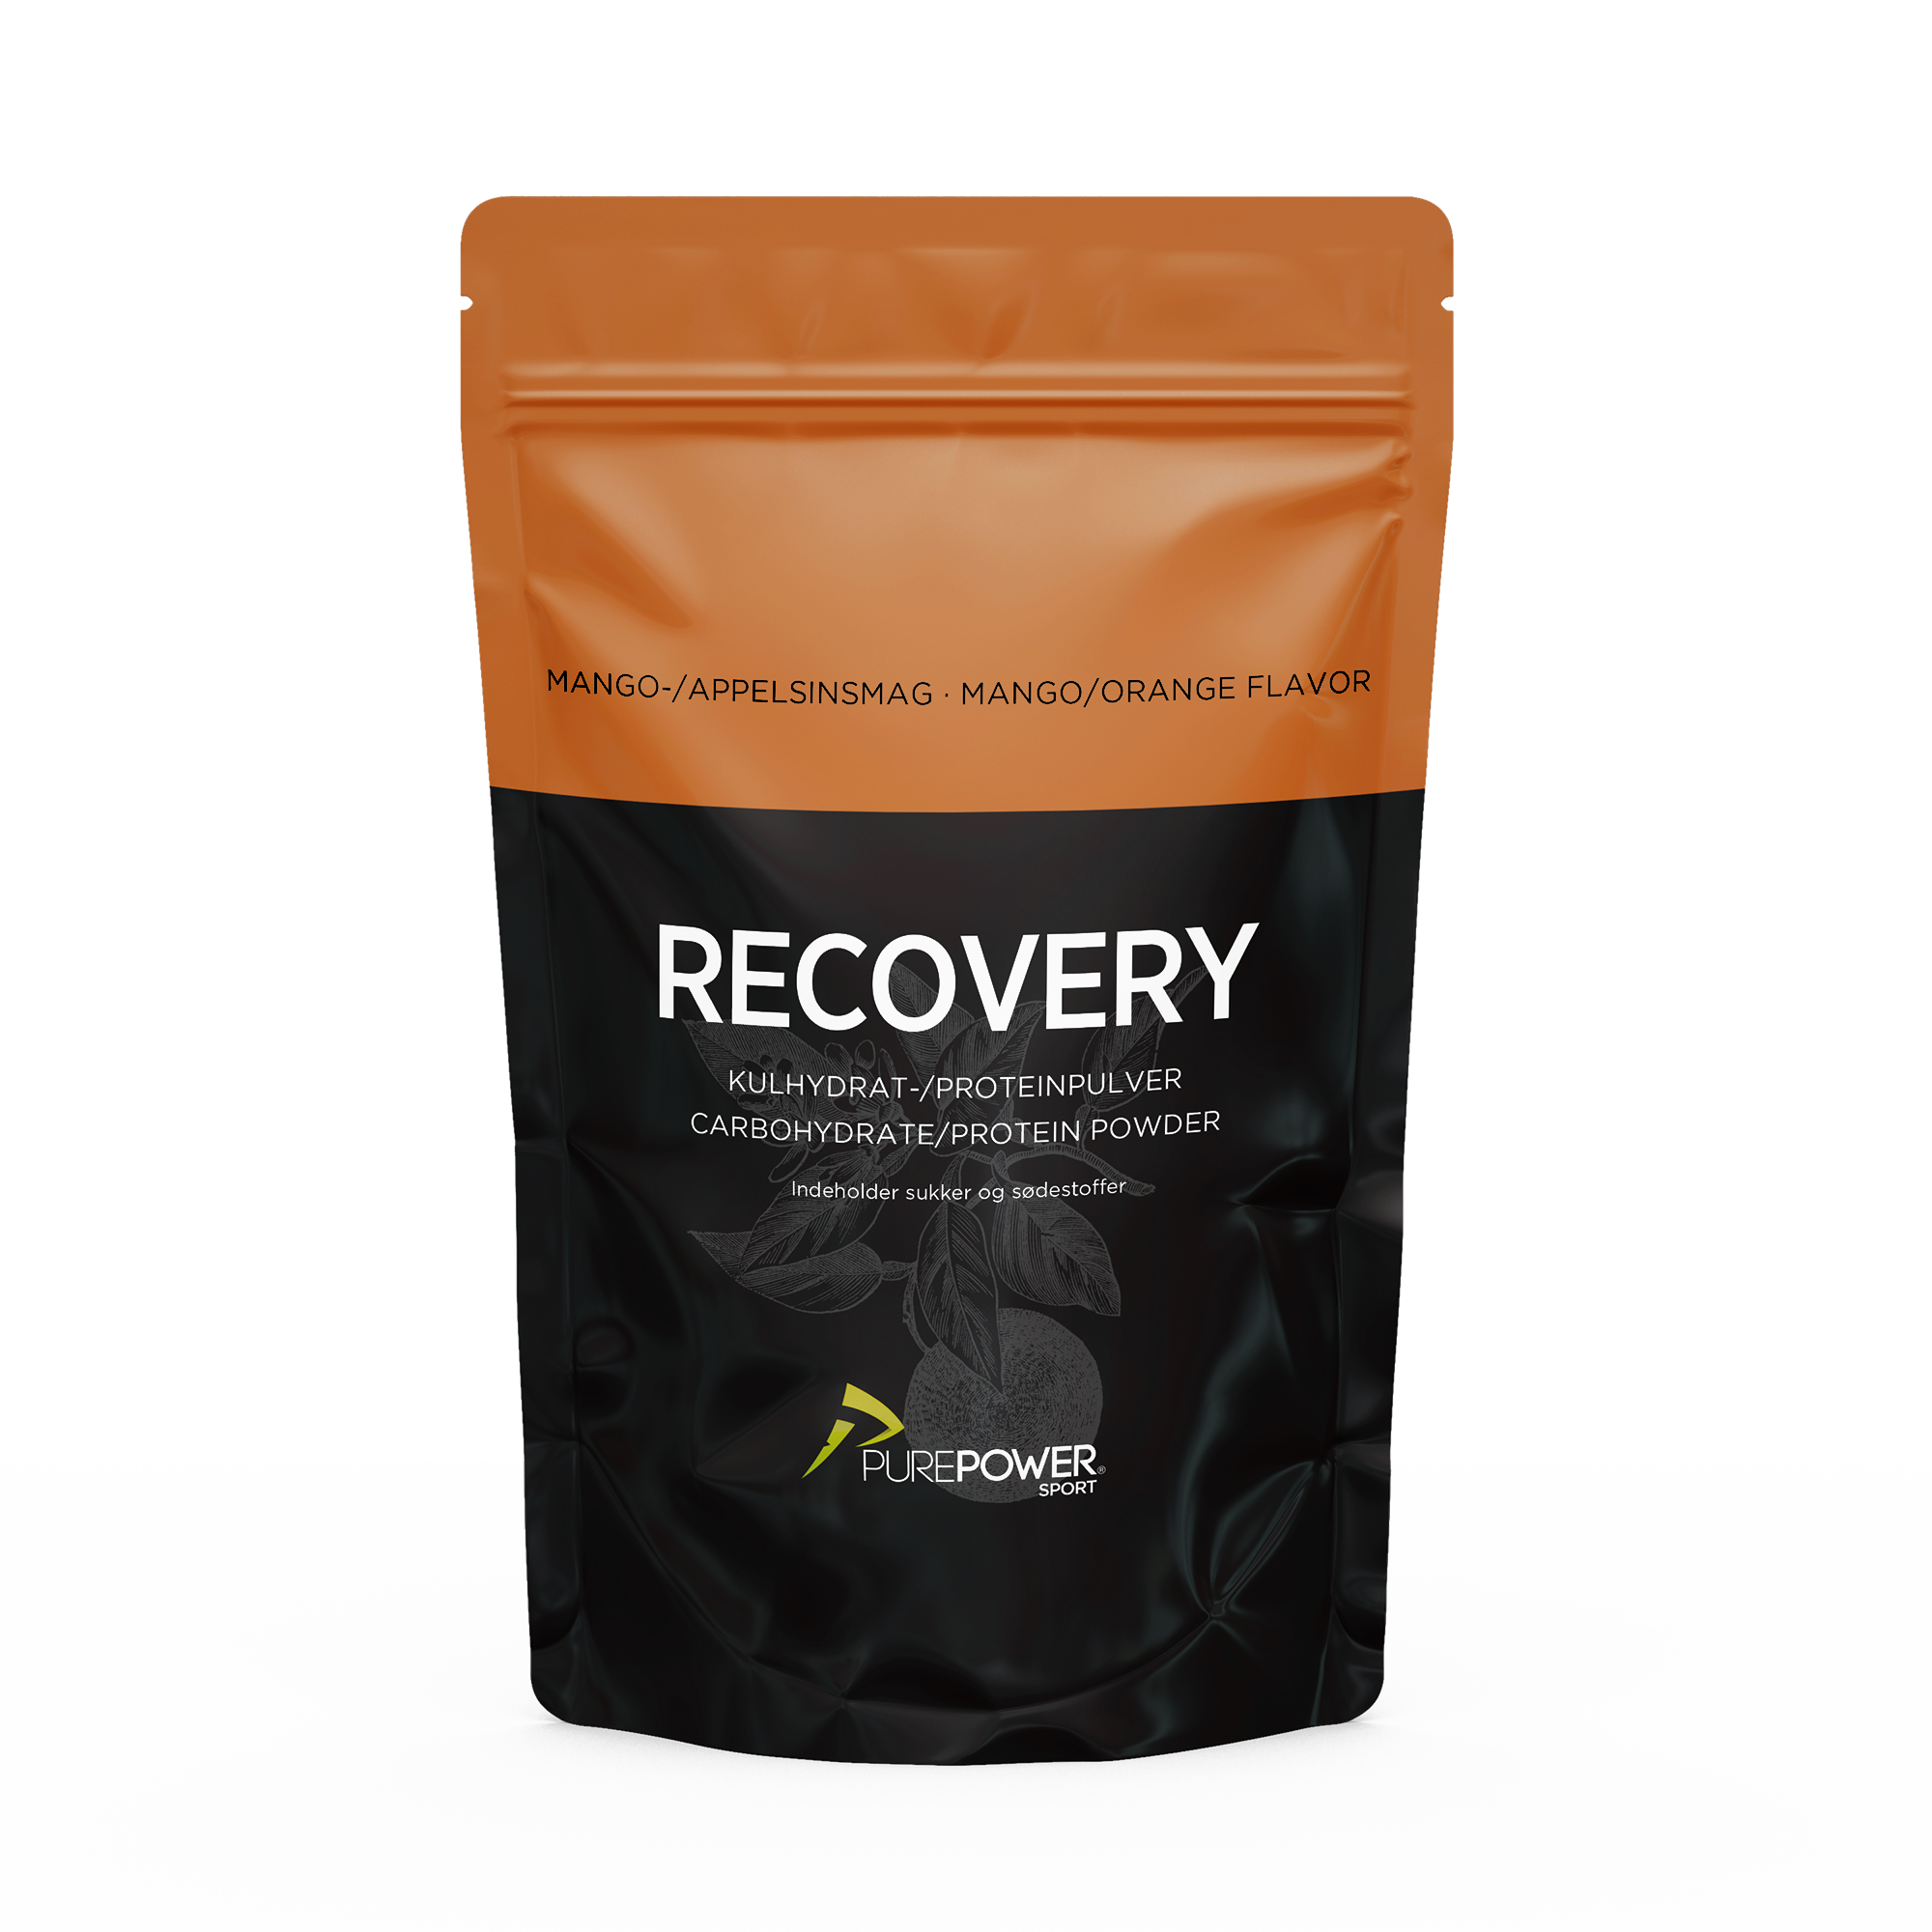 Se PurePower Recovery - Restitutionsdrik - Mango / appelsin - 400 g hos PurePower